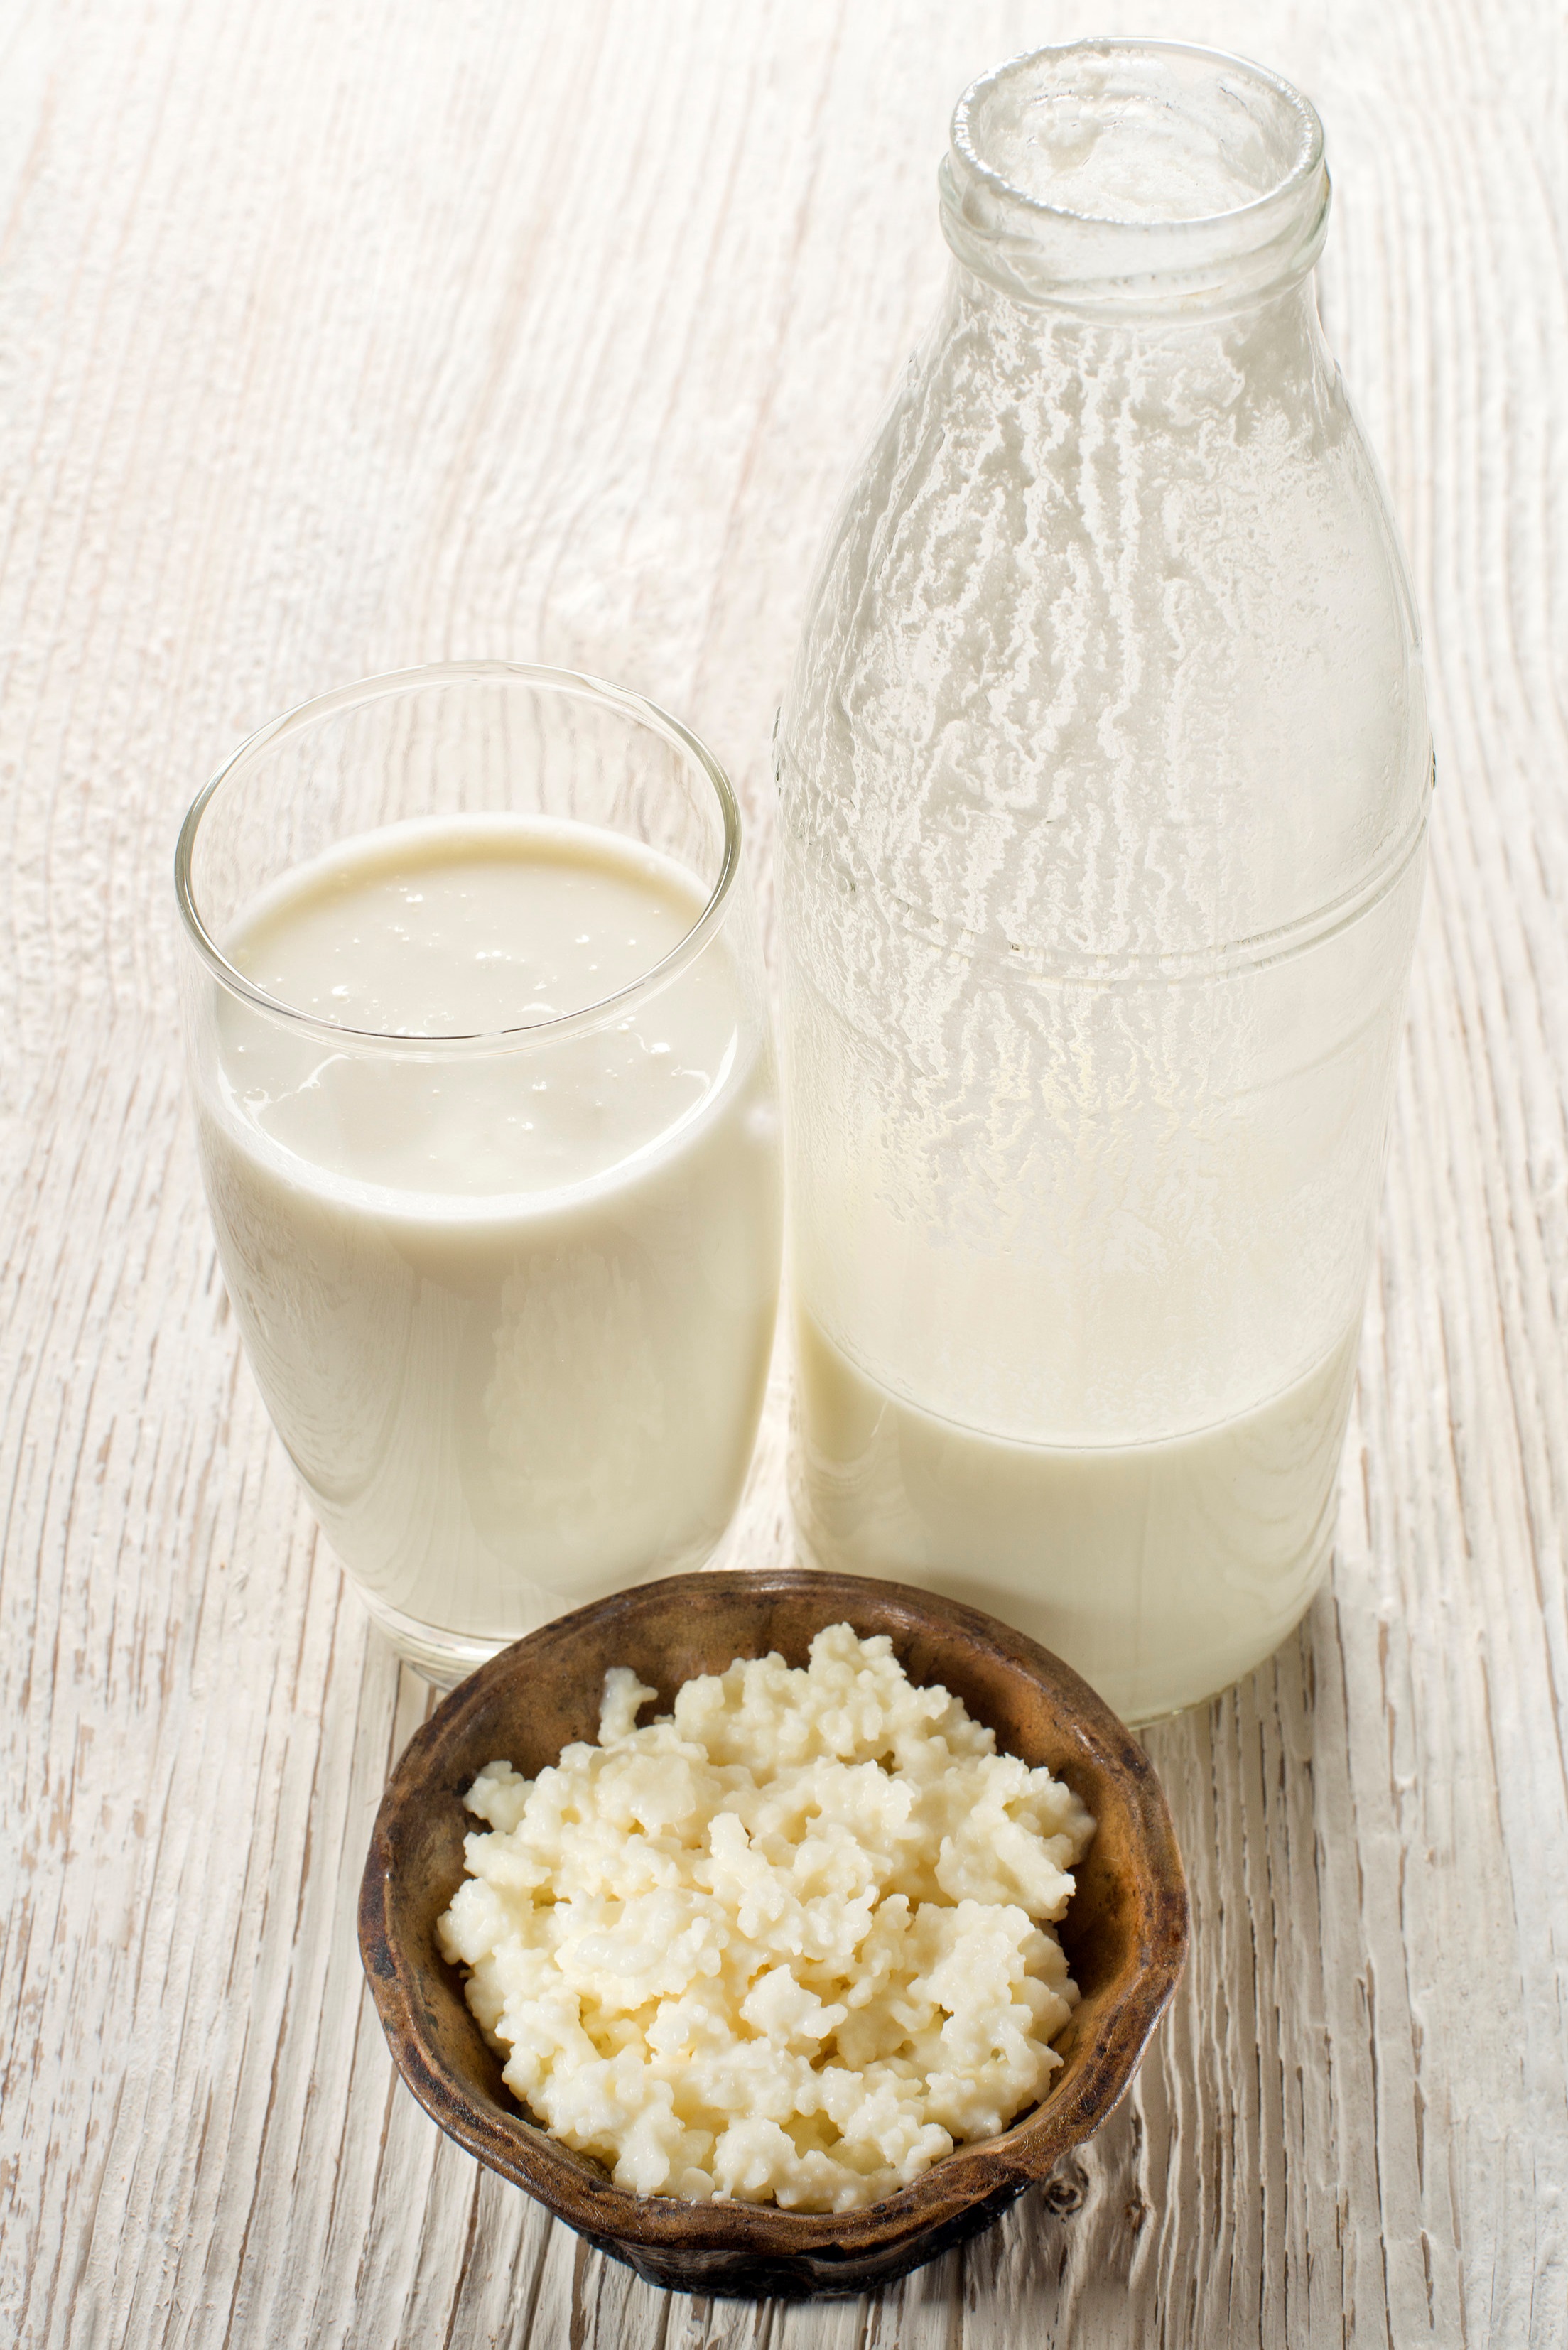 Fresh Milk Kefir Grains — Positively Probiotic